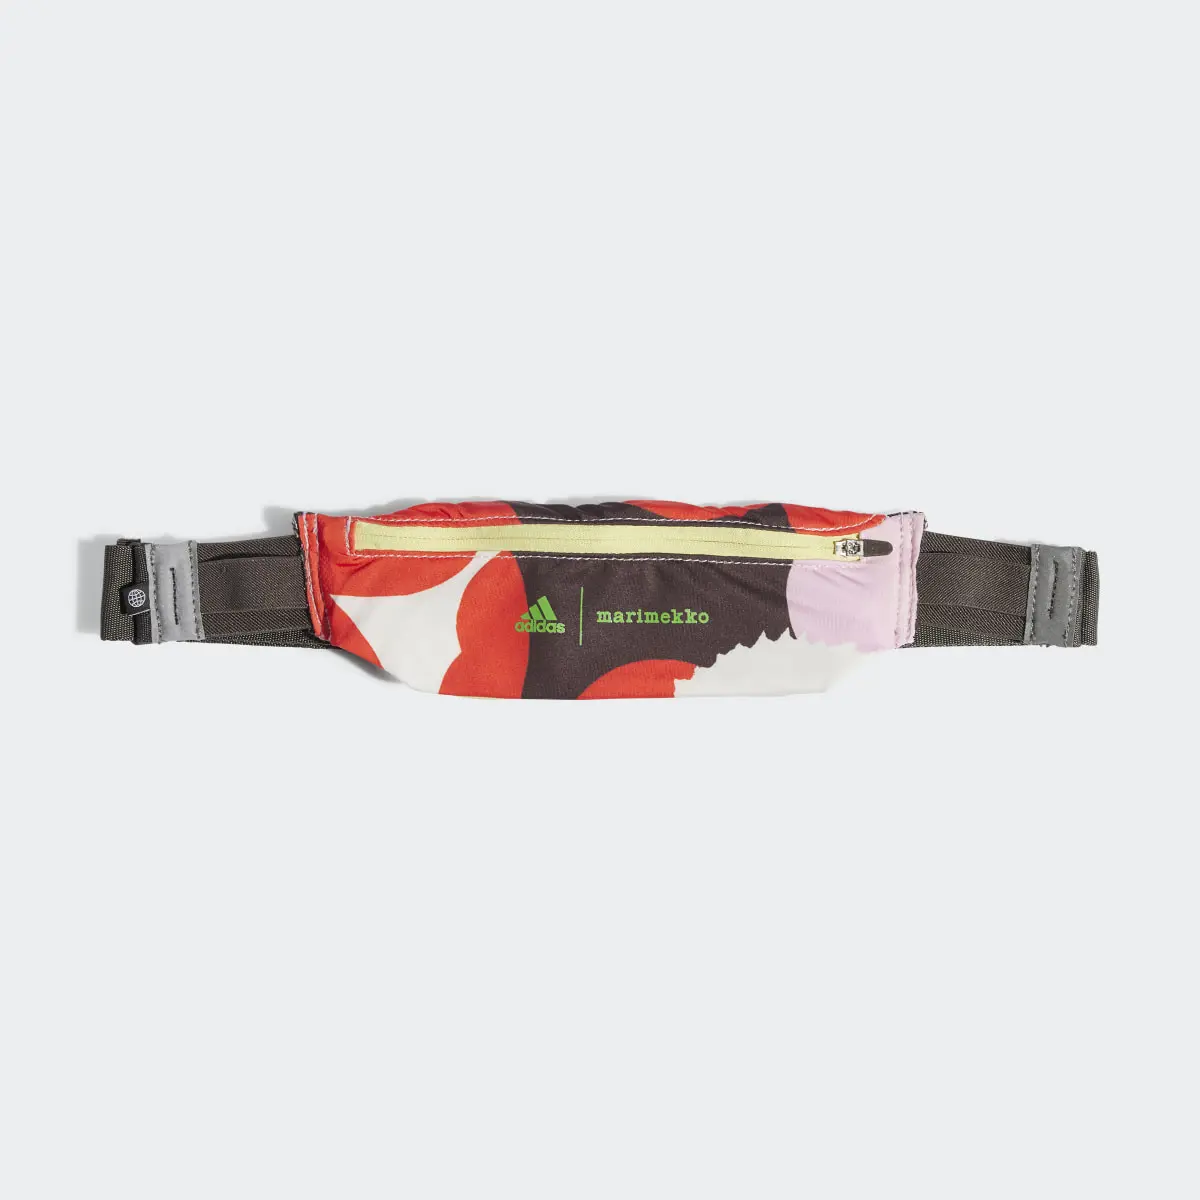 Adidas Marimekko Running Belt. 2